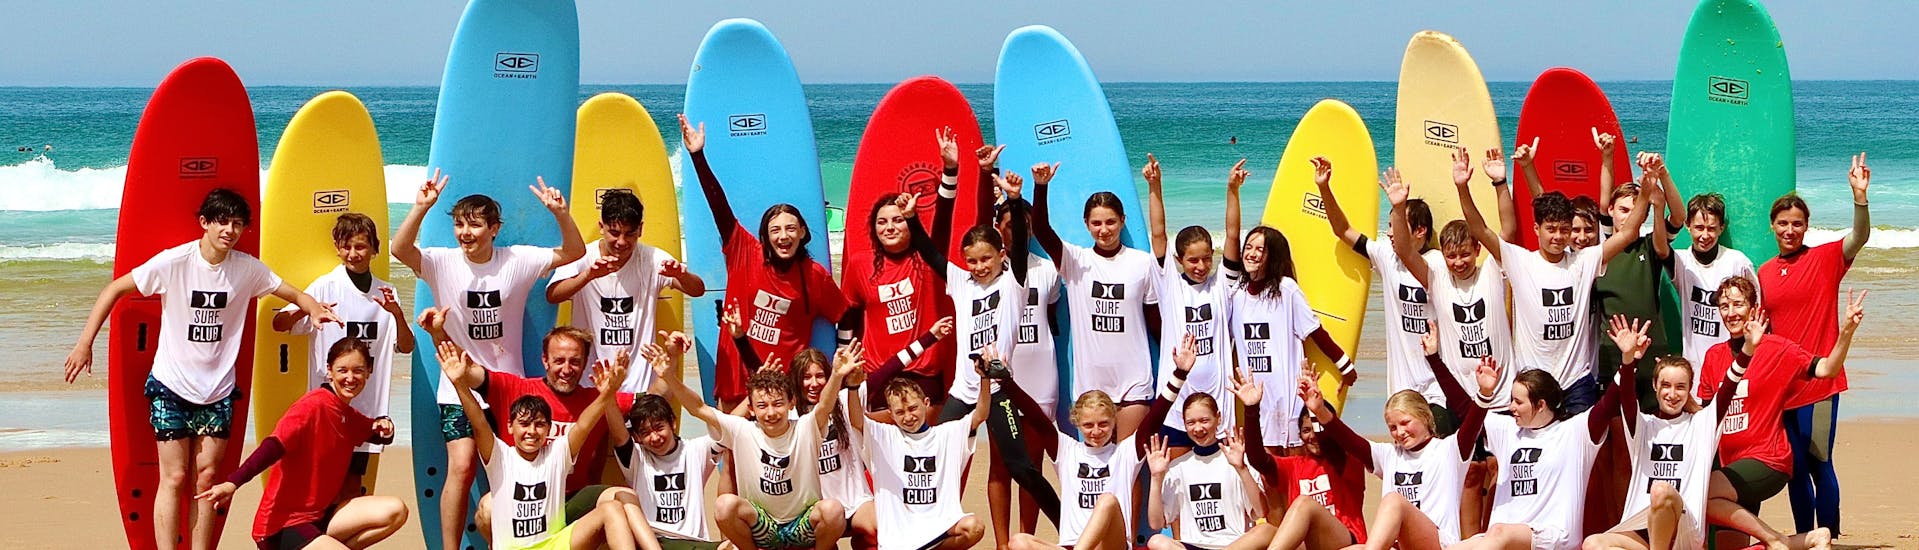 Surflessen in Lacanau vanaf 11 jaar voor alle niveaus.